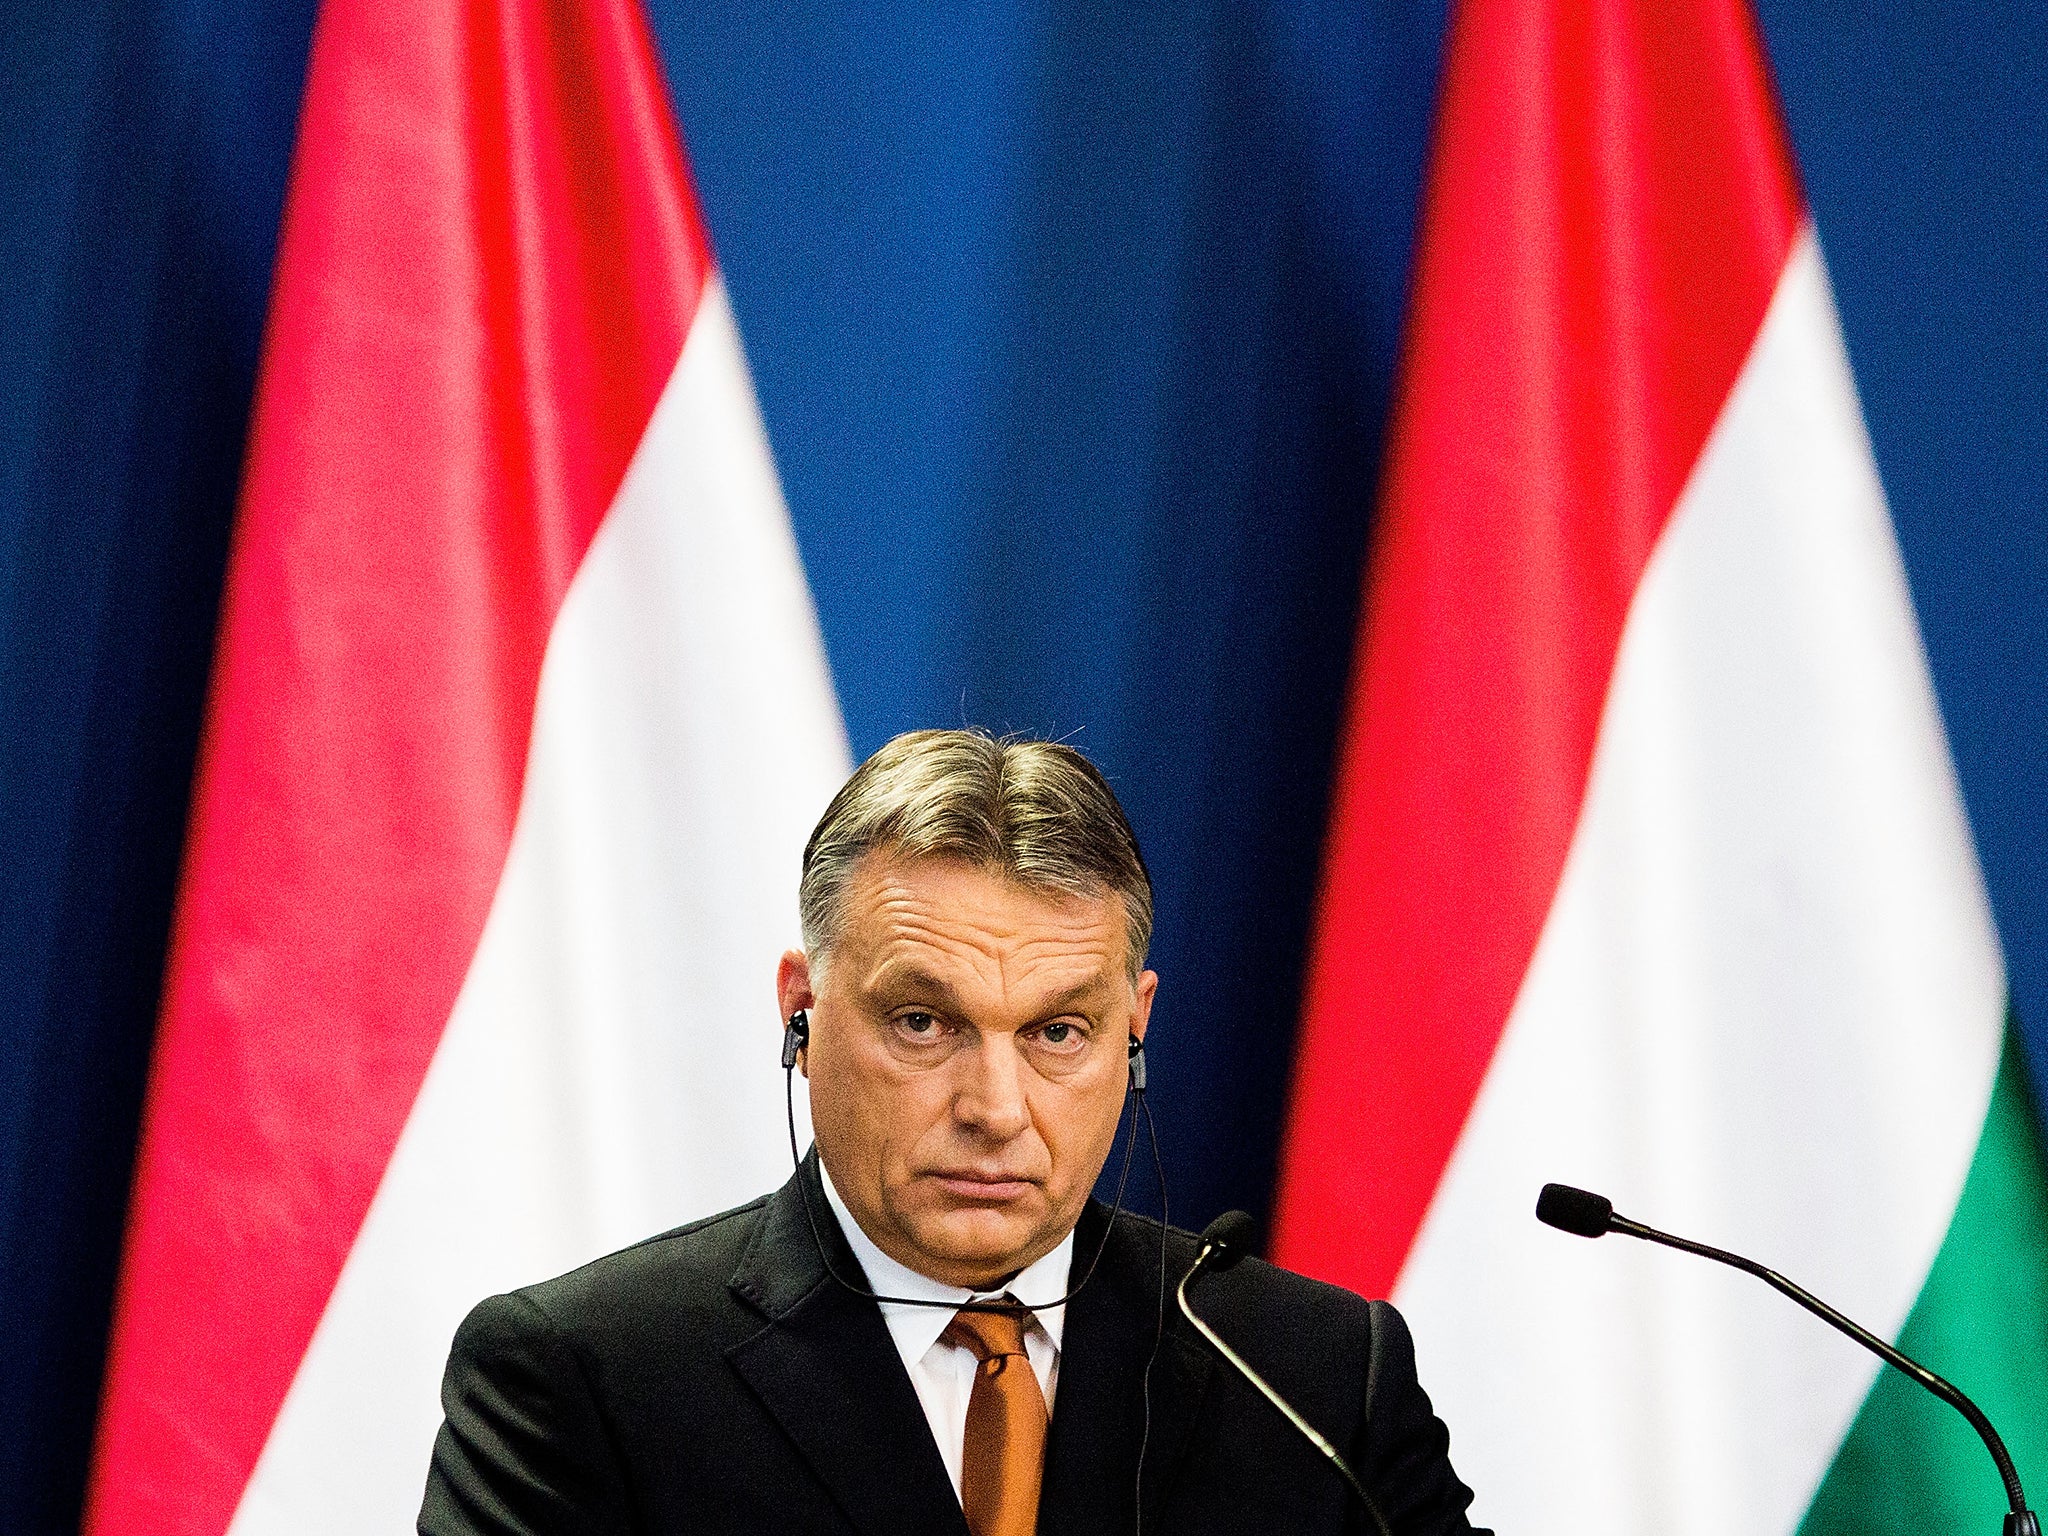 Viktor Orban has led the charge against NGOs